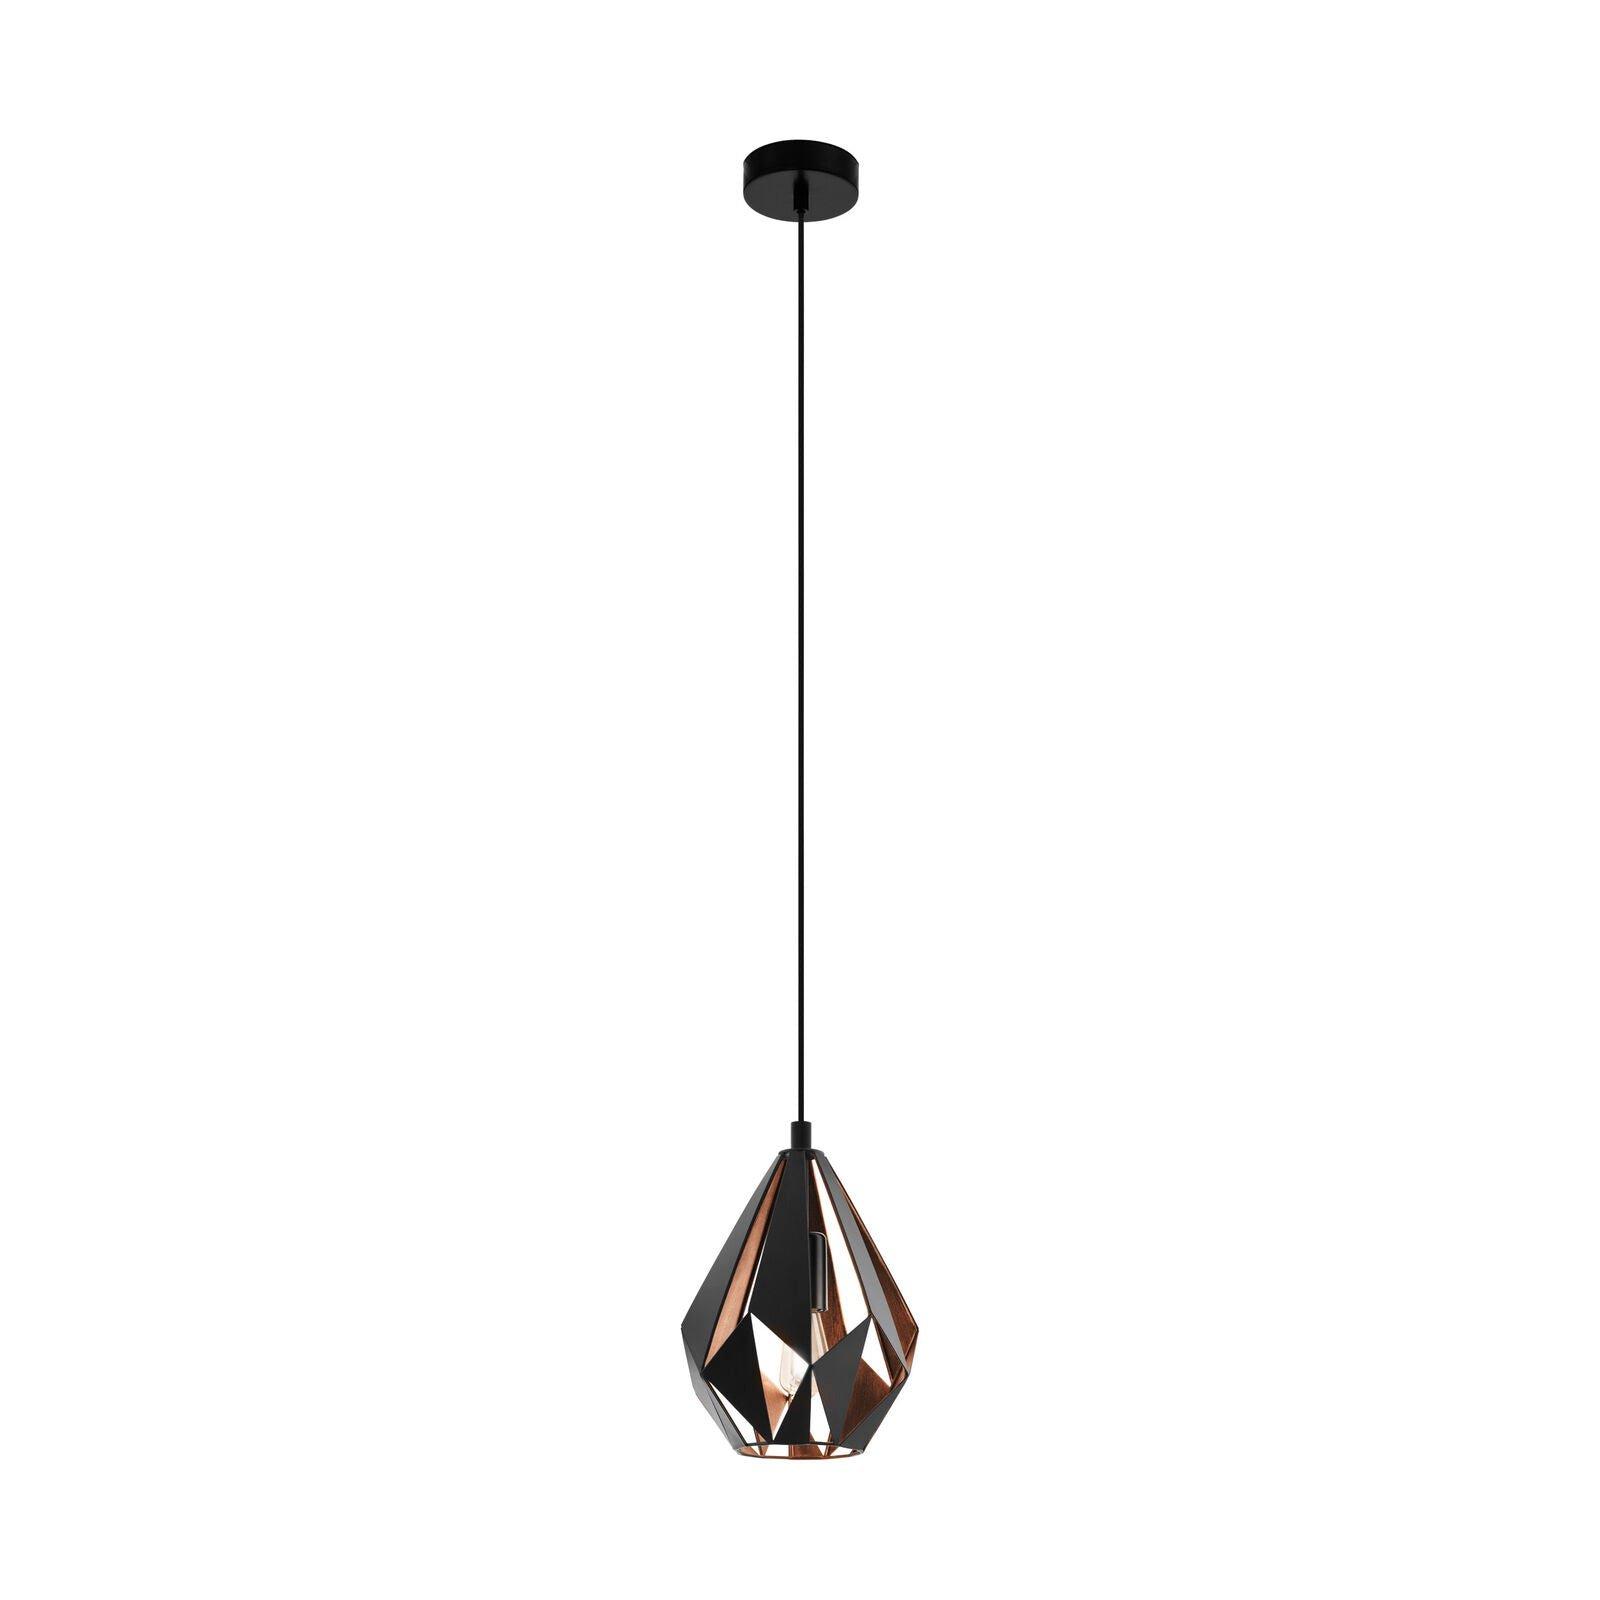 Hanging Ceiling Pendant Light Black / Copper Geometric 1x 60W E27 Feature Lamp